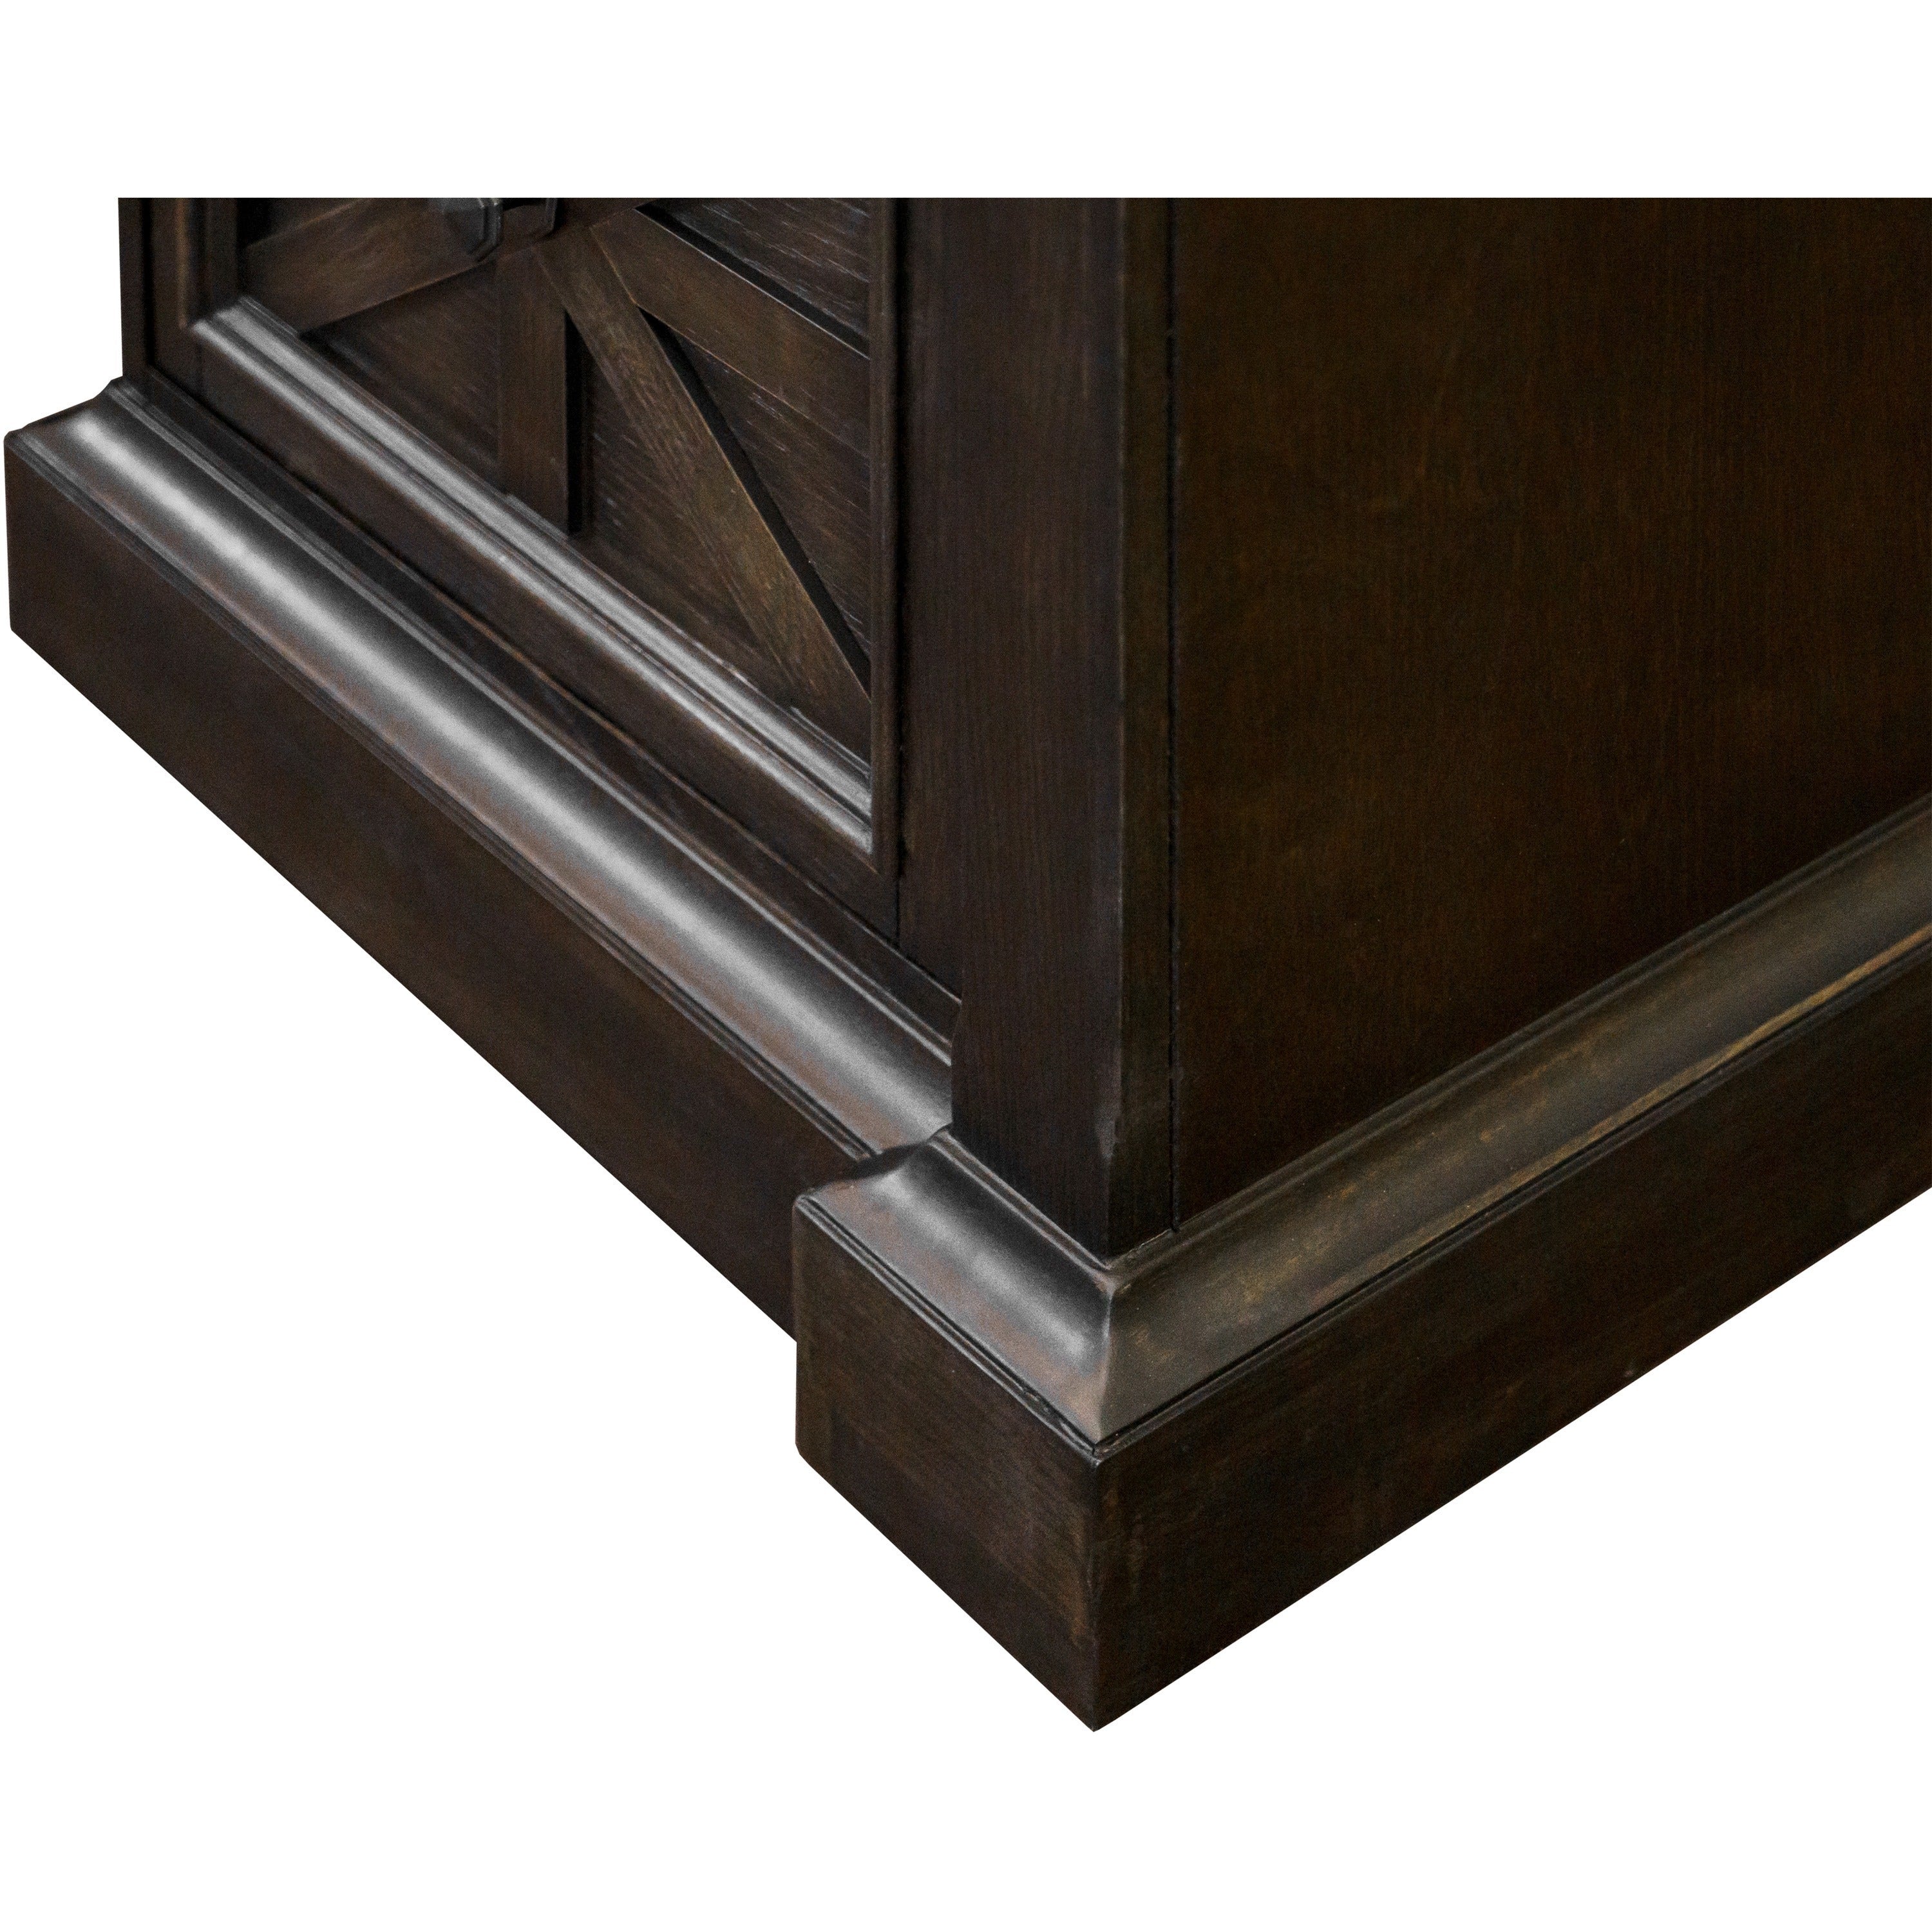 martin-kingston-office-desking-unit-66-x-3030-5-x-utility-file-drawers-double-pedestal-material-wood-finish-dark-chocolate-rub-through_mrtimkn680 - 4